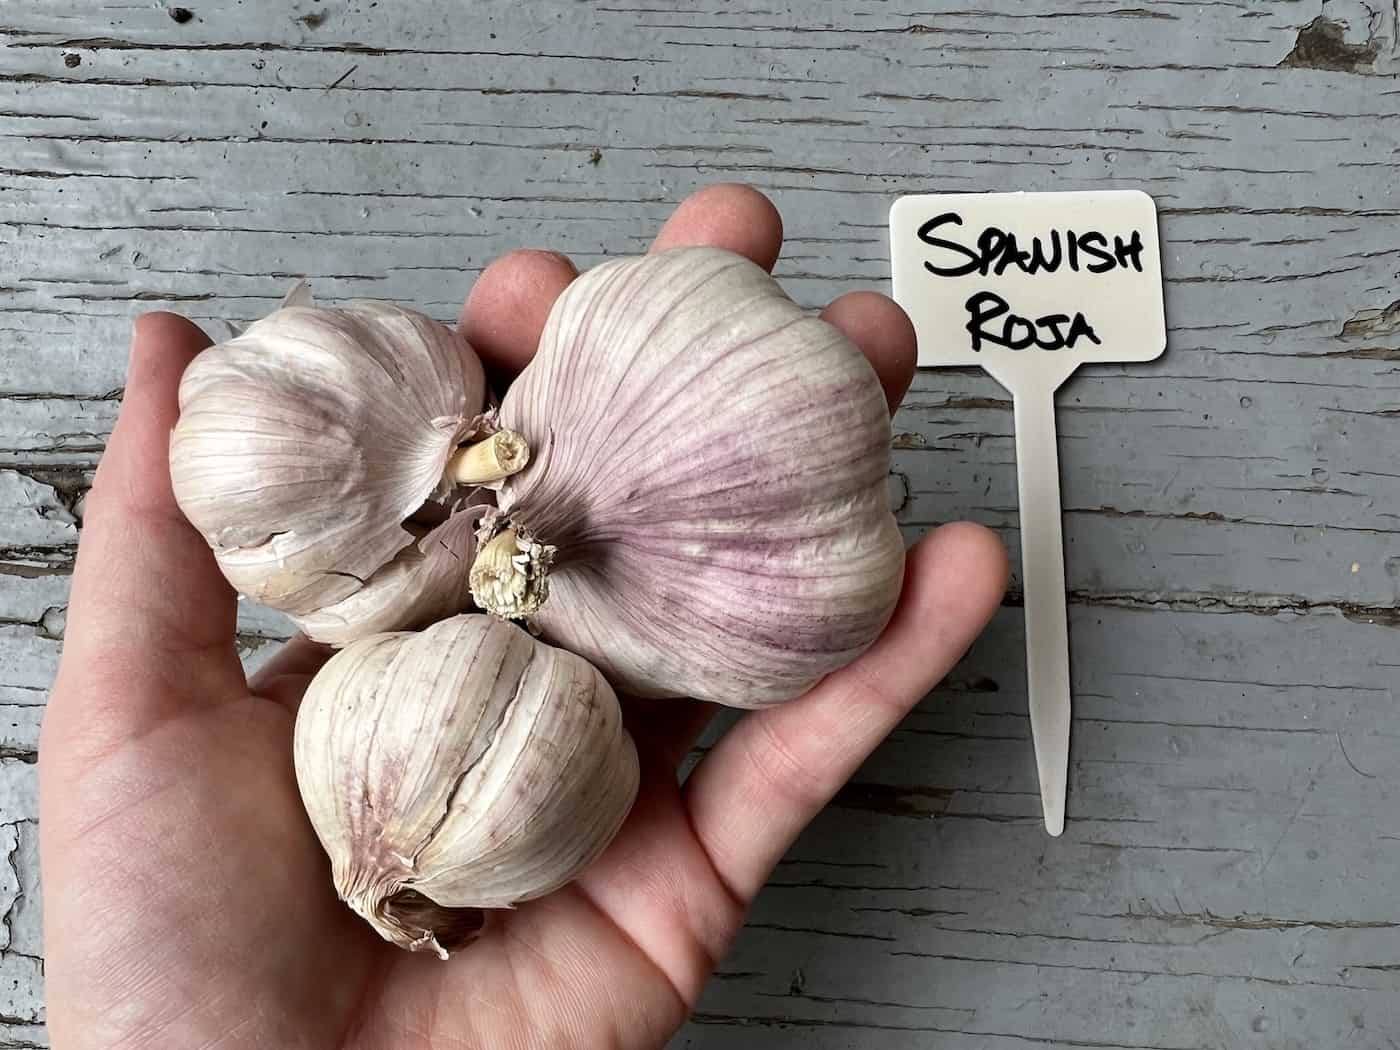 Bulbs of spanish roja garlic